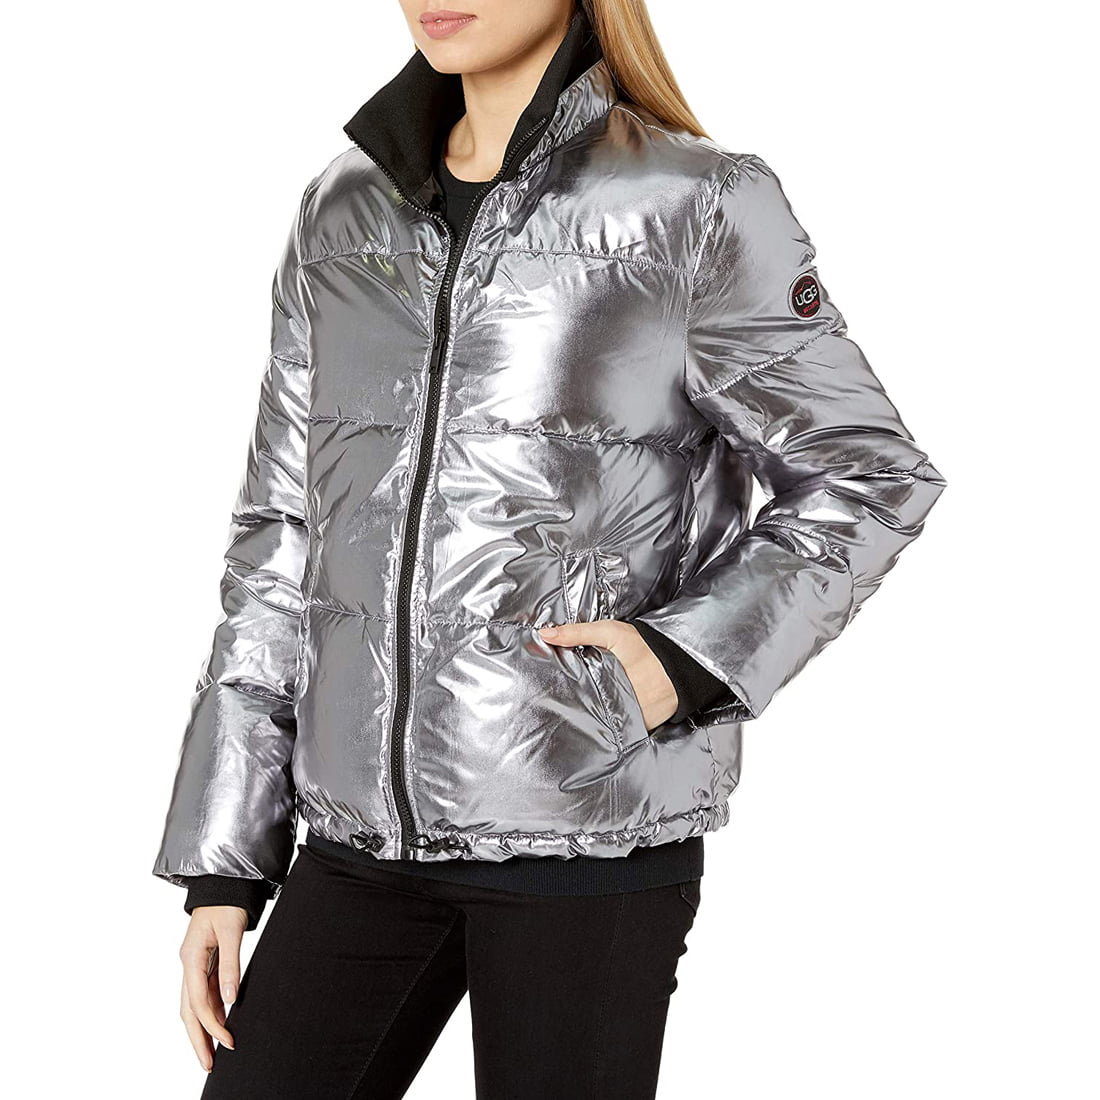 Ugg Women's Izzie Puffer Jacket Nylon, Silver Metallic, Large